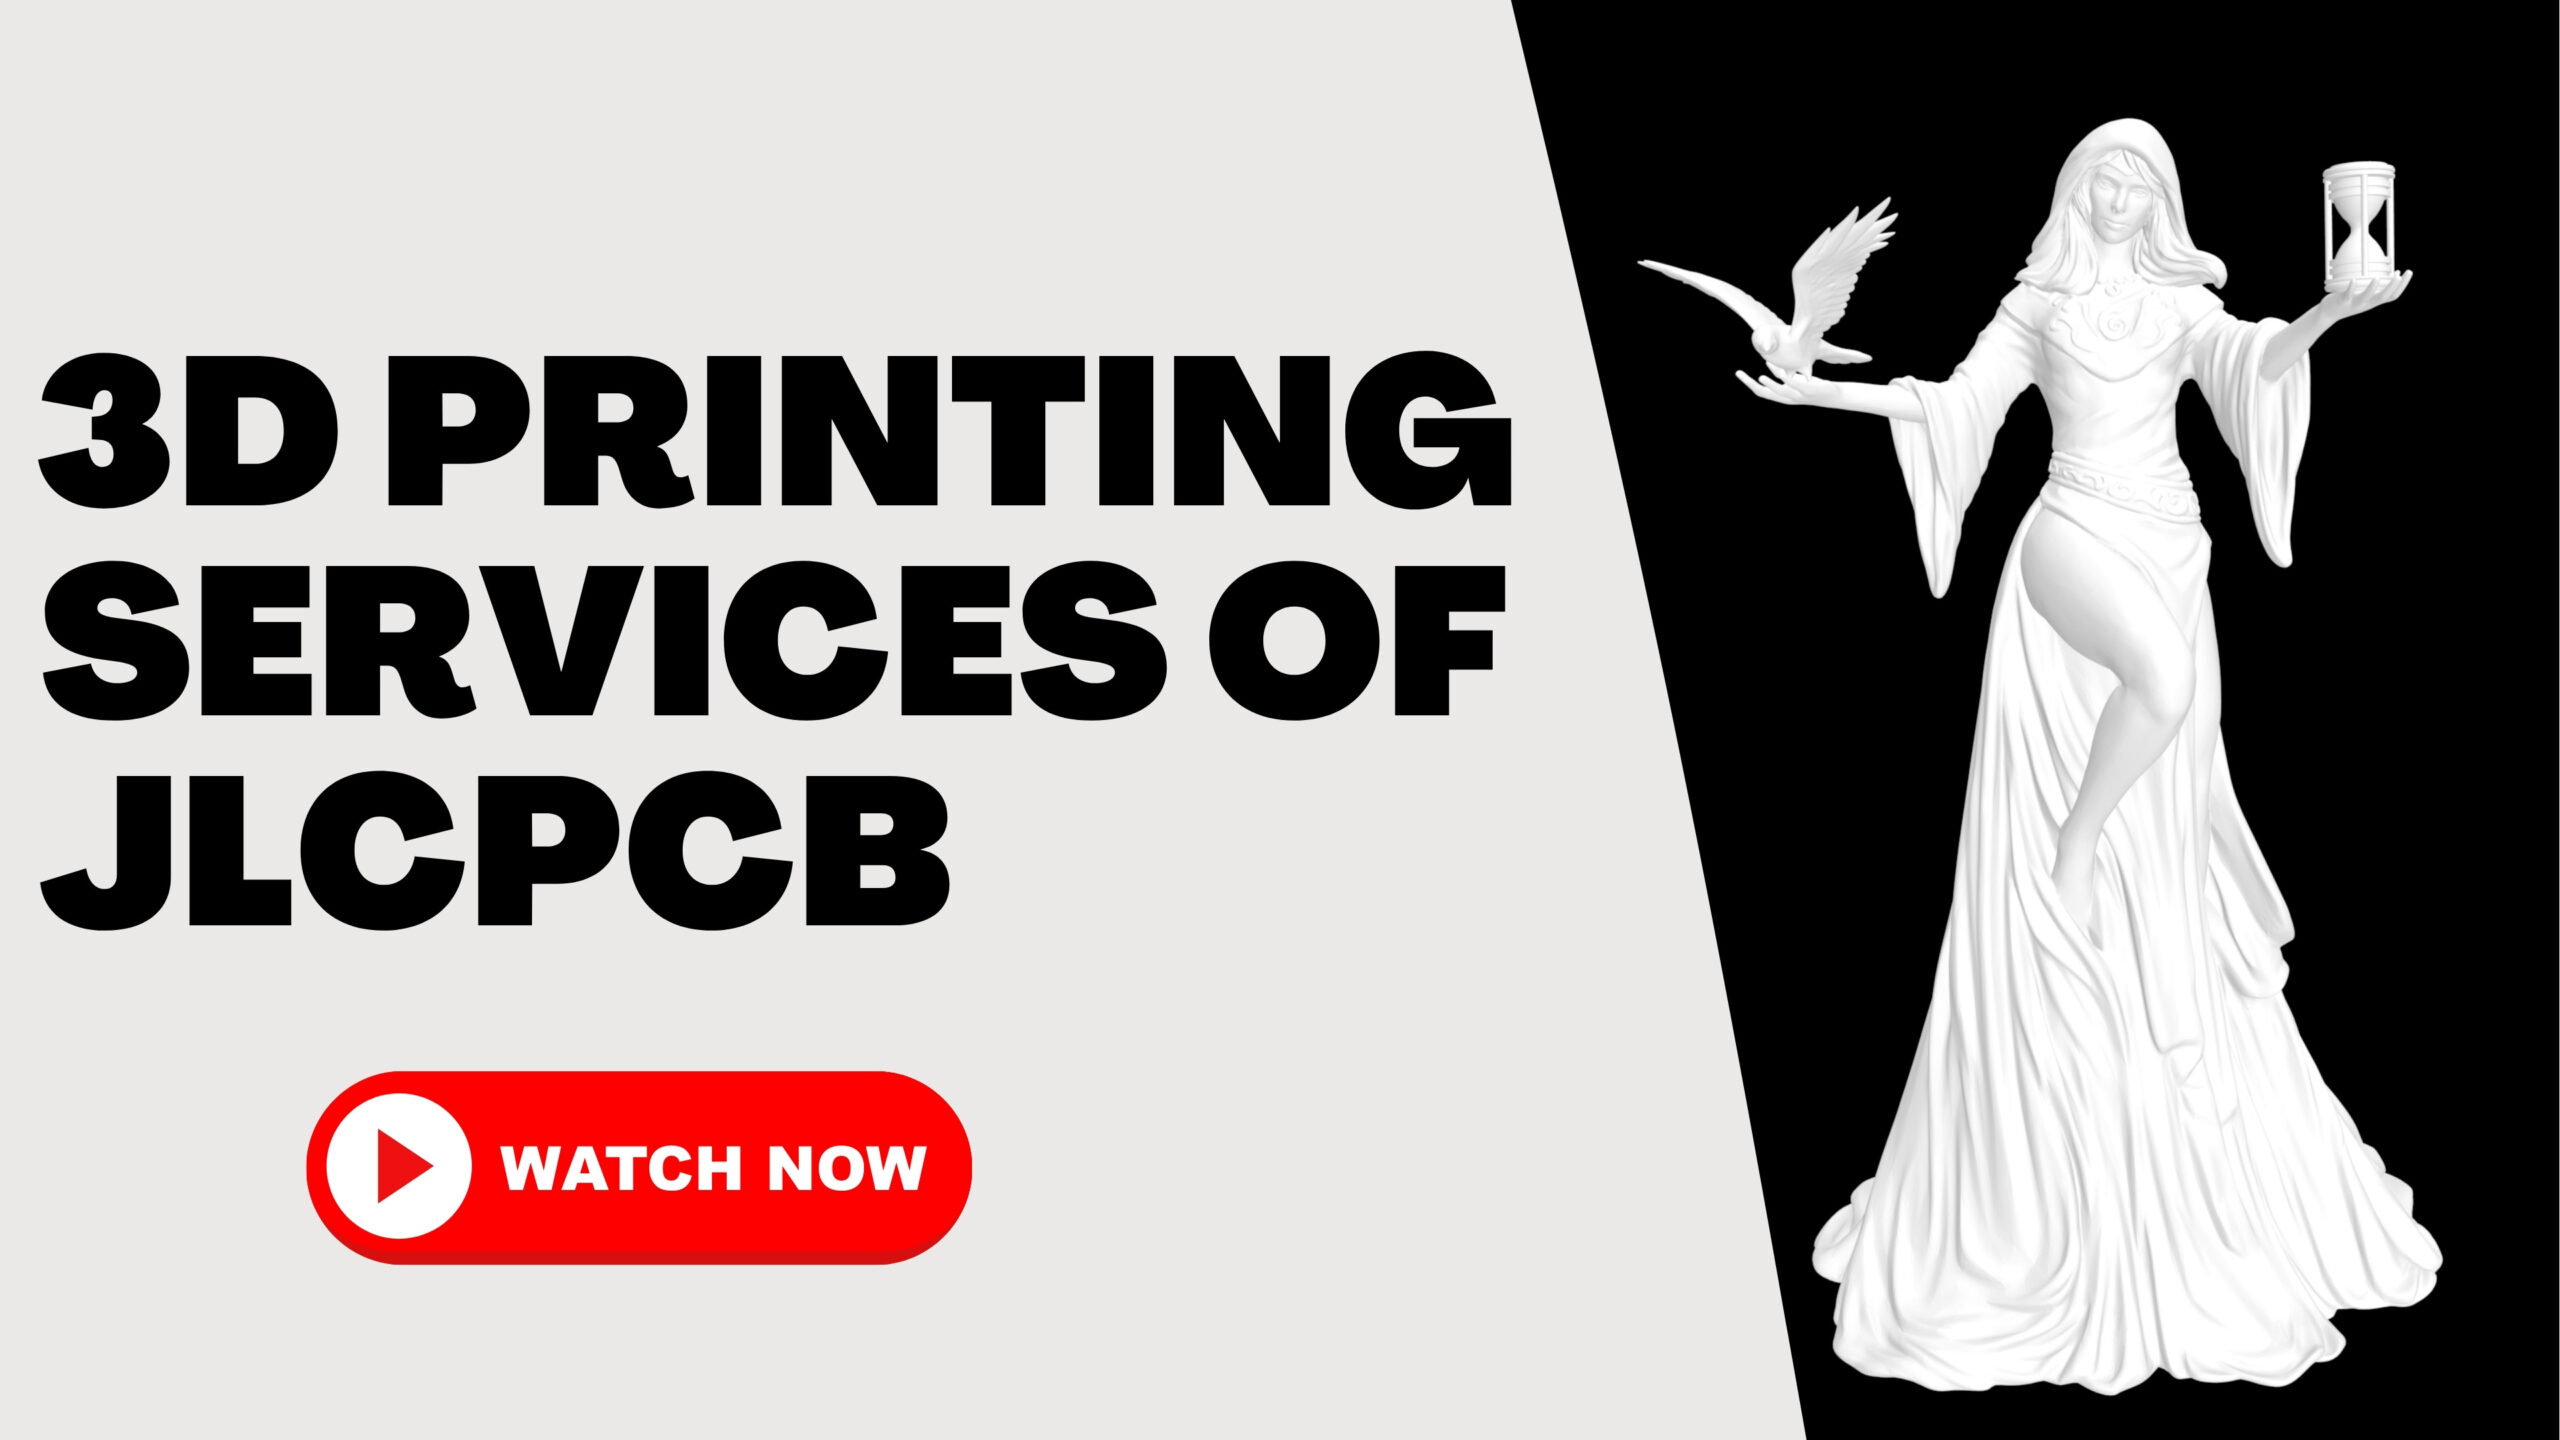 3D Printing Services of JLCPCB.